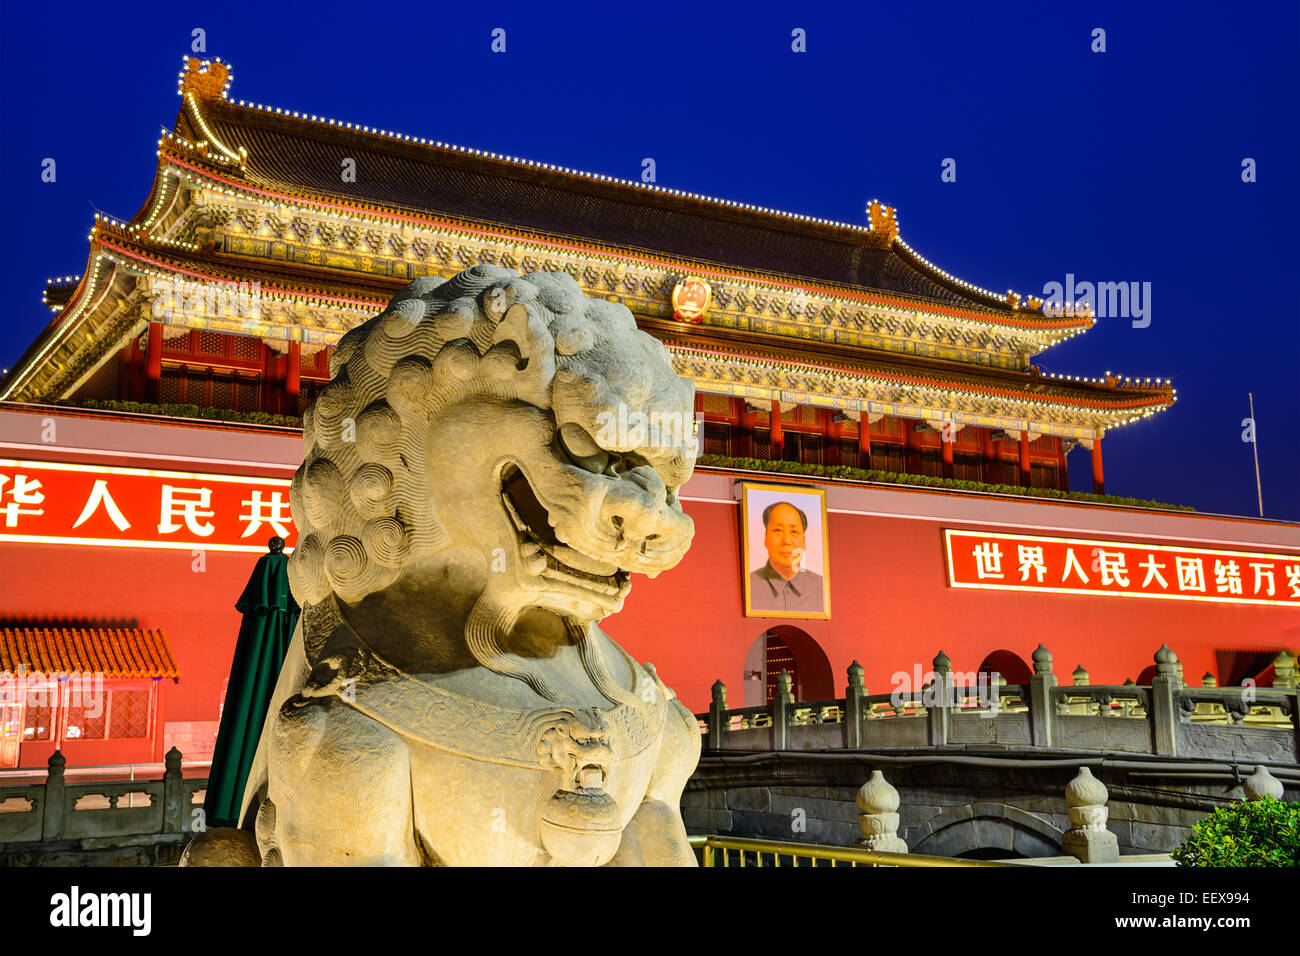 A lion statue guards The Tiananmen Gate at Tiananmen Square. Stock Photo